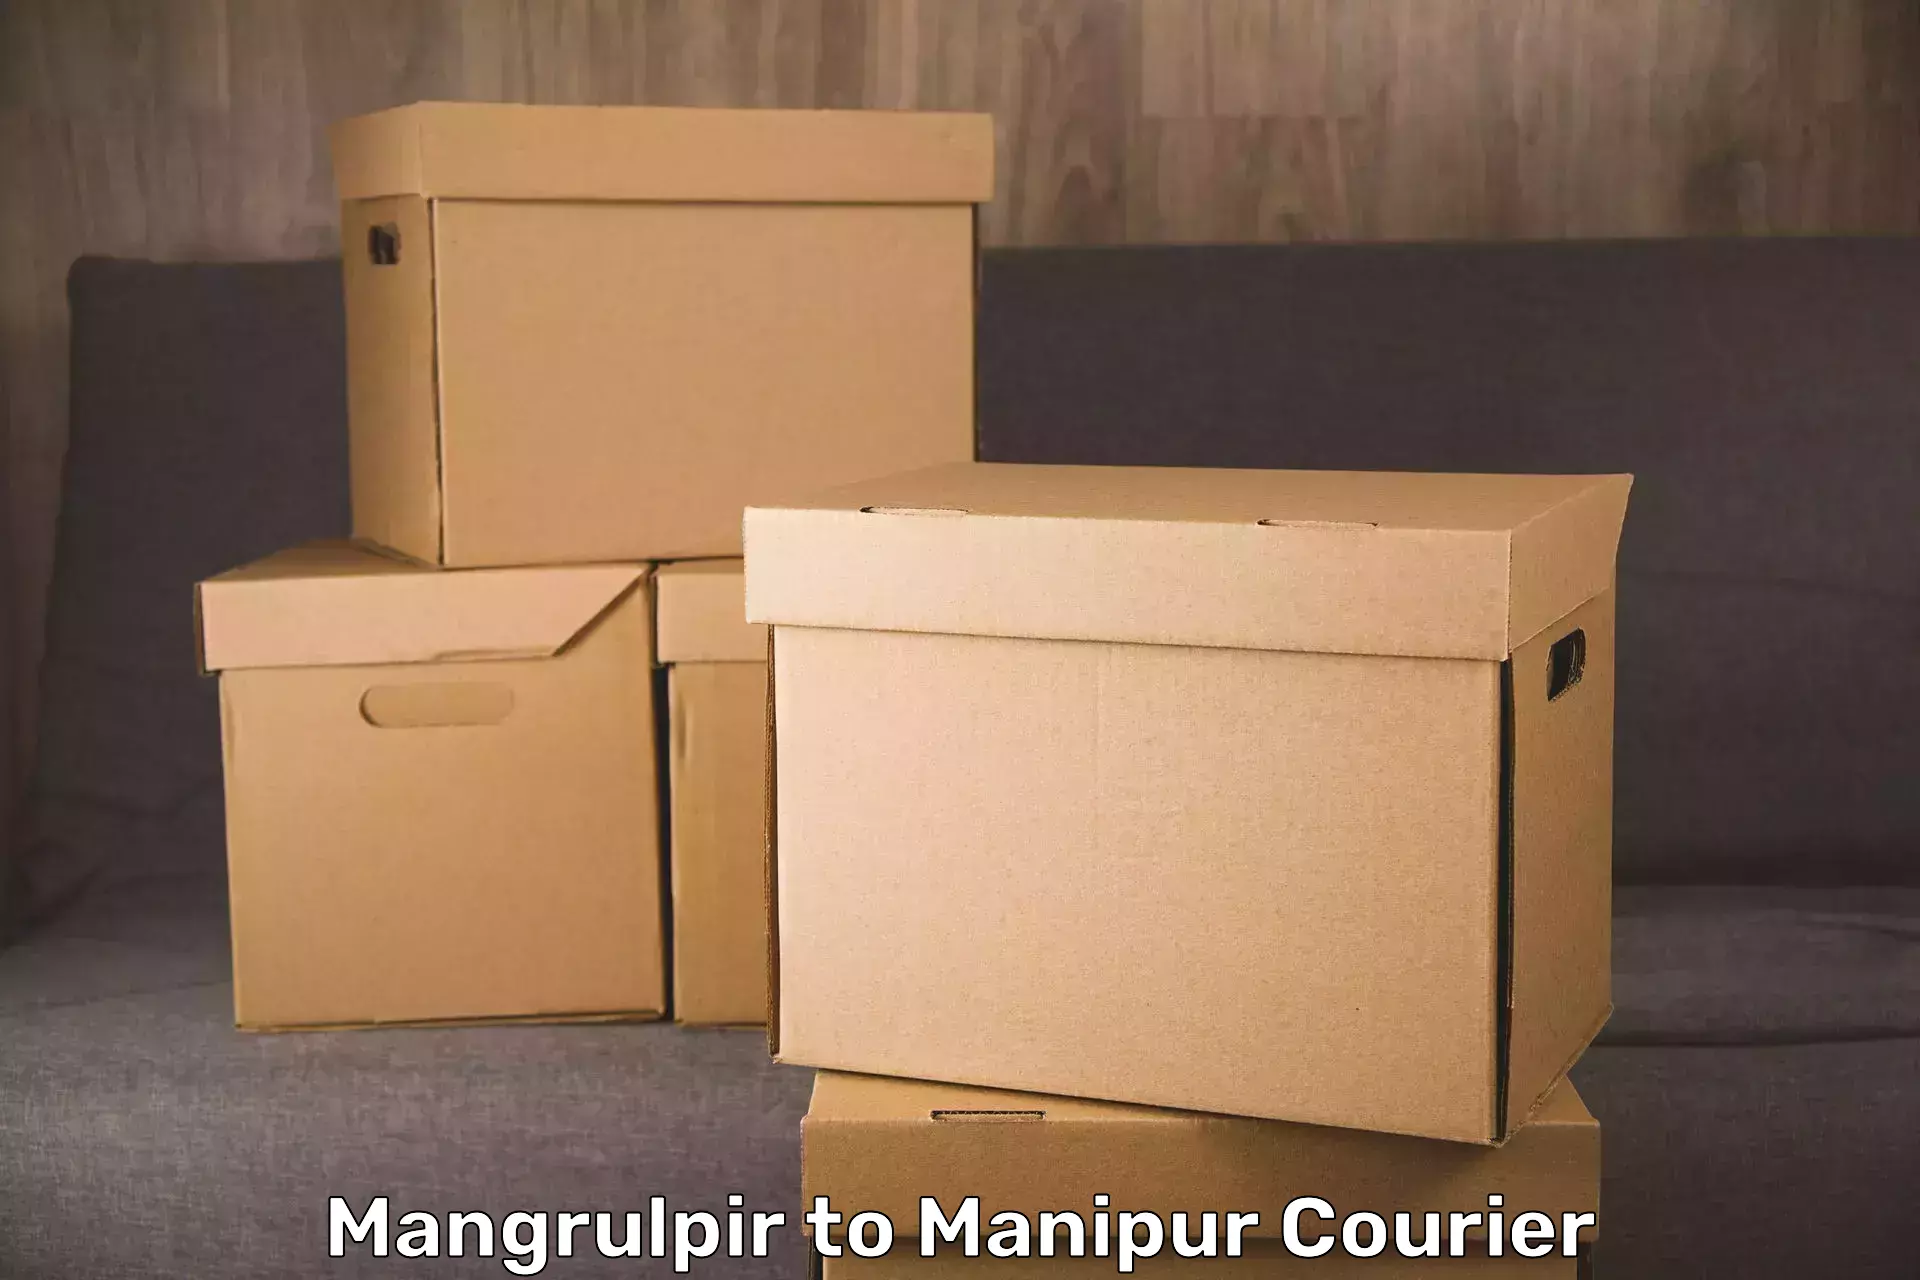 Emergency baggage service Mangrulpir to Manipur